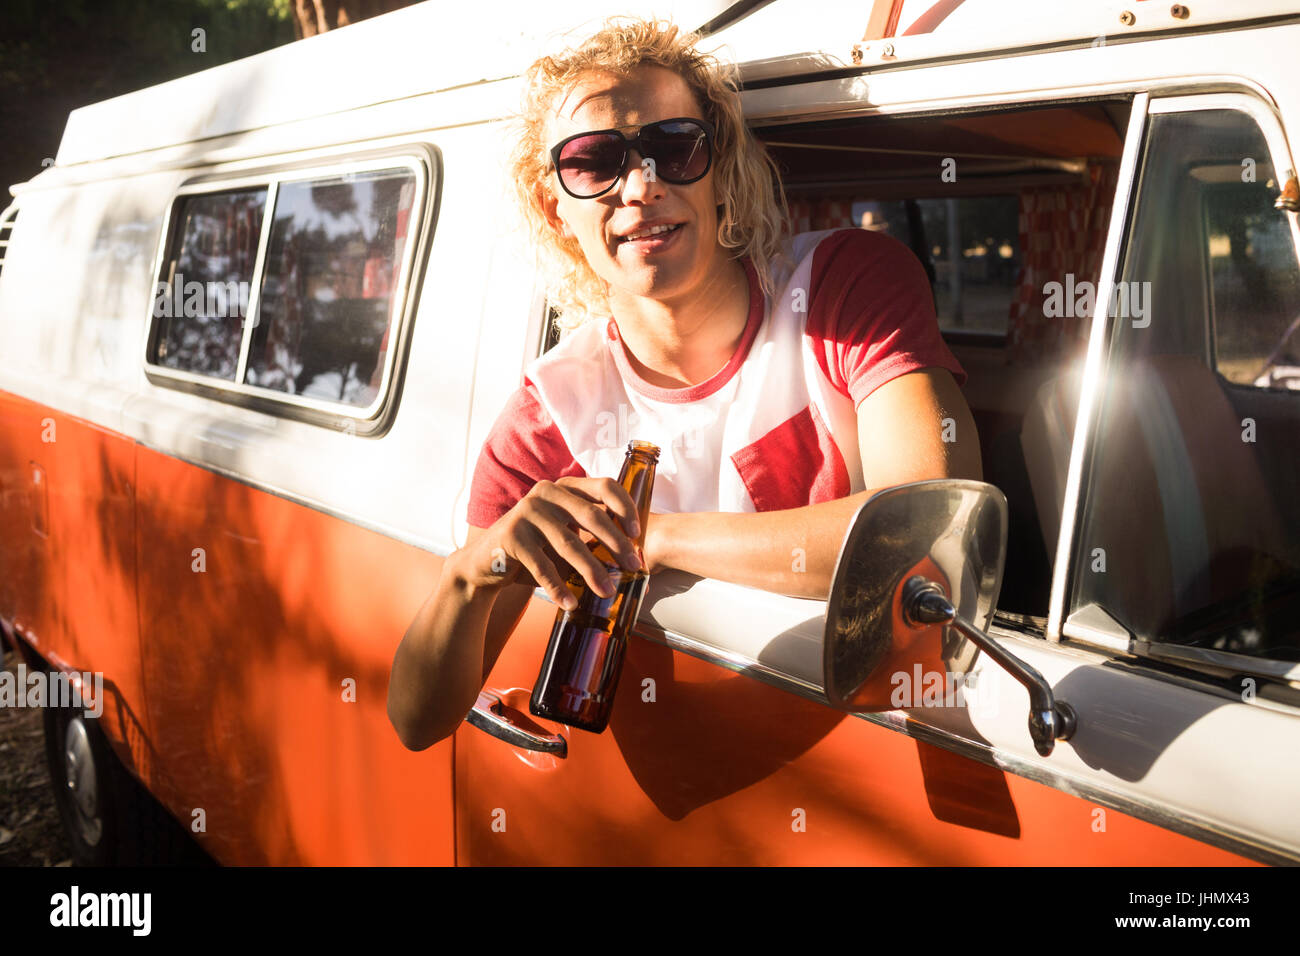 Portrait of man with beer leaning on camper van window Stock Photo